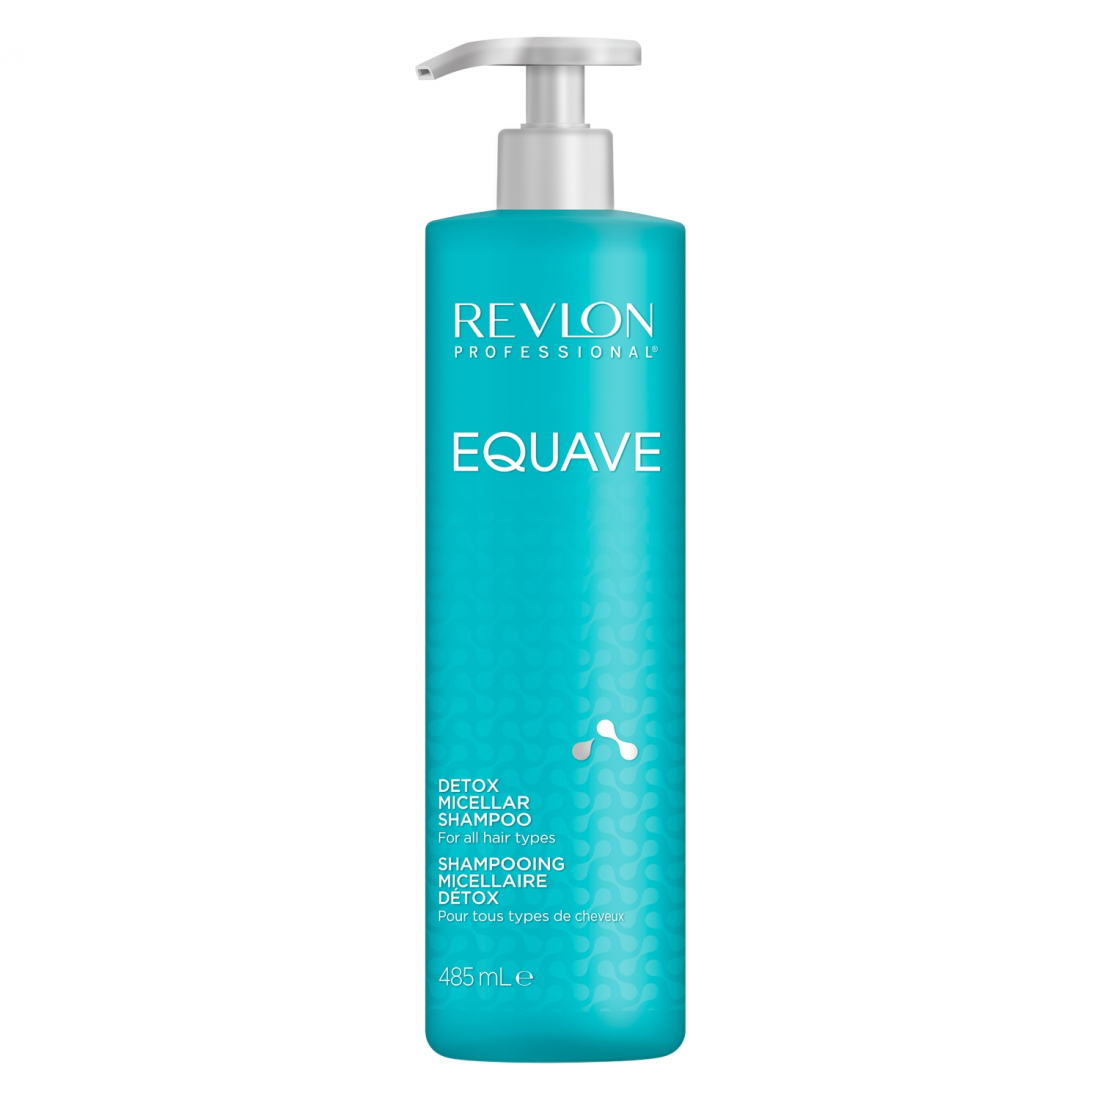 'Equave Instant Beauty Detangling' Micellar Shampoo - 485 ml